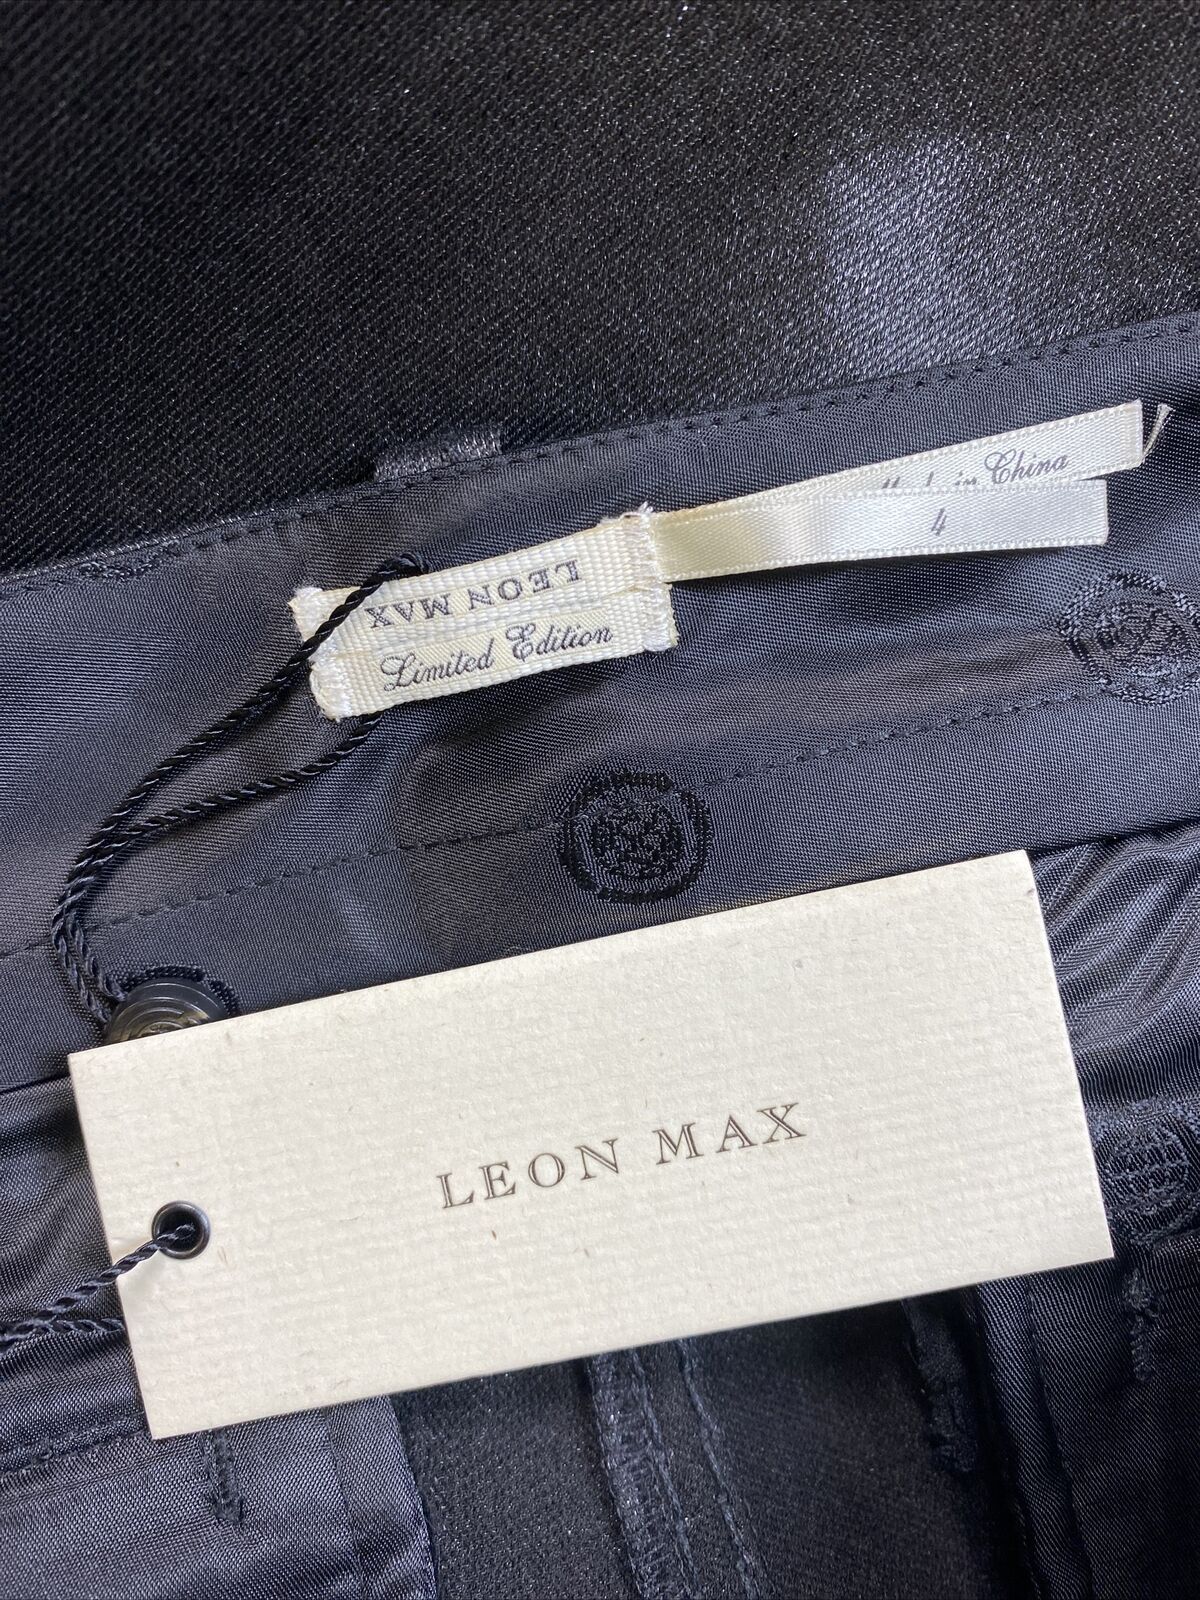 NEW Leon Max Women's Black Metallic Skinny Jeans - 4